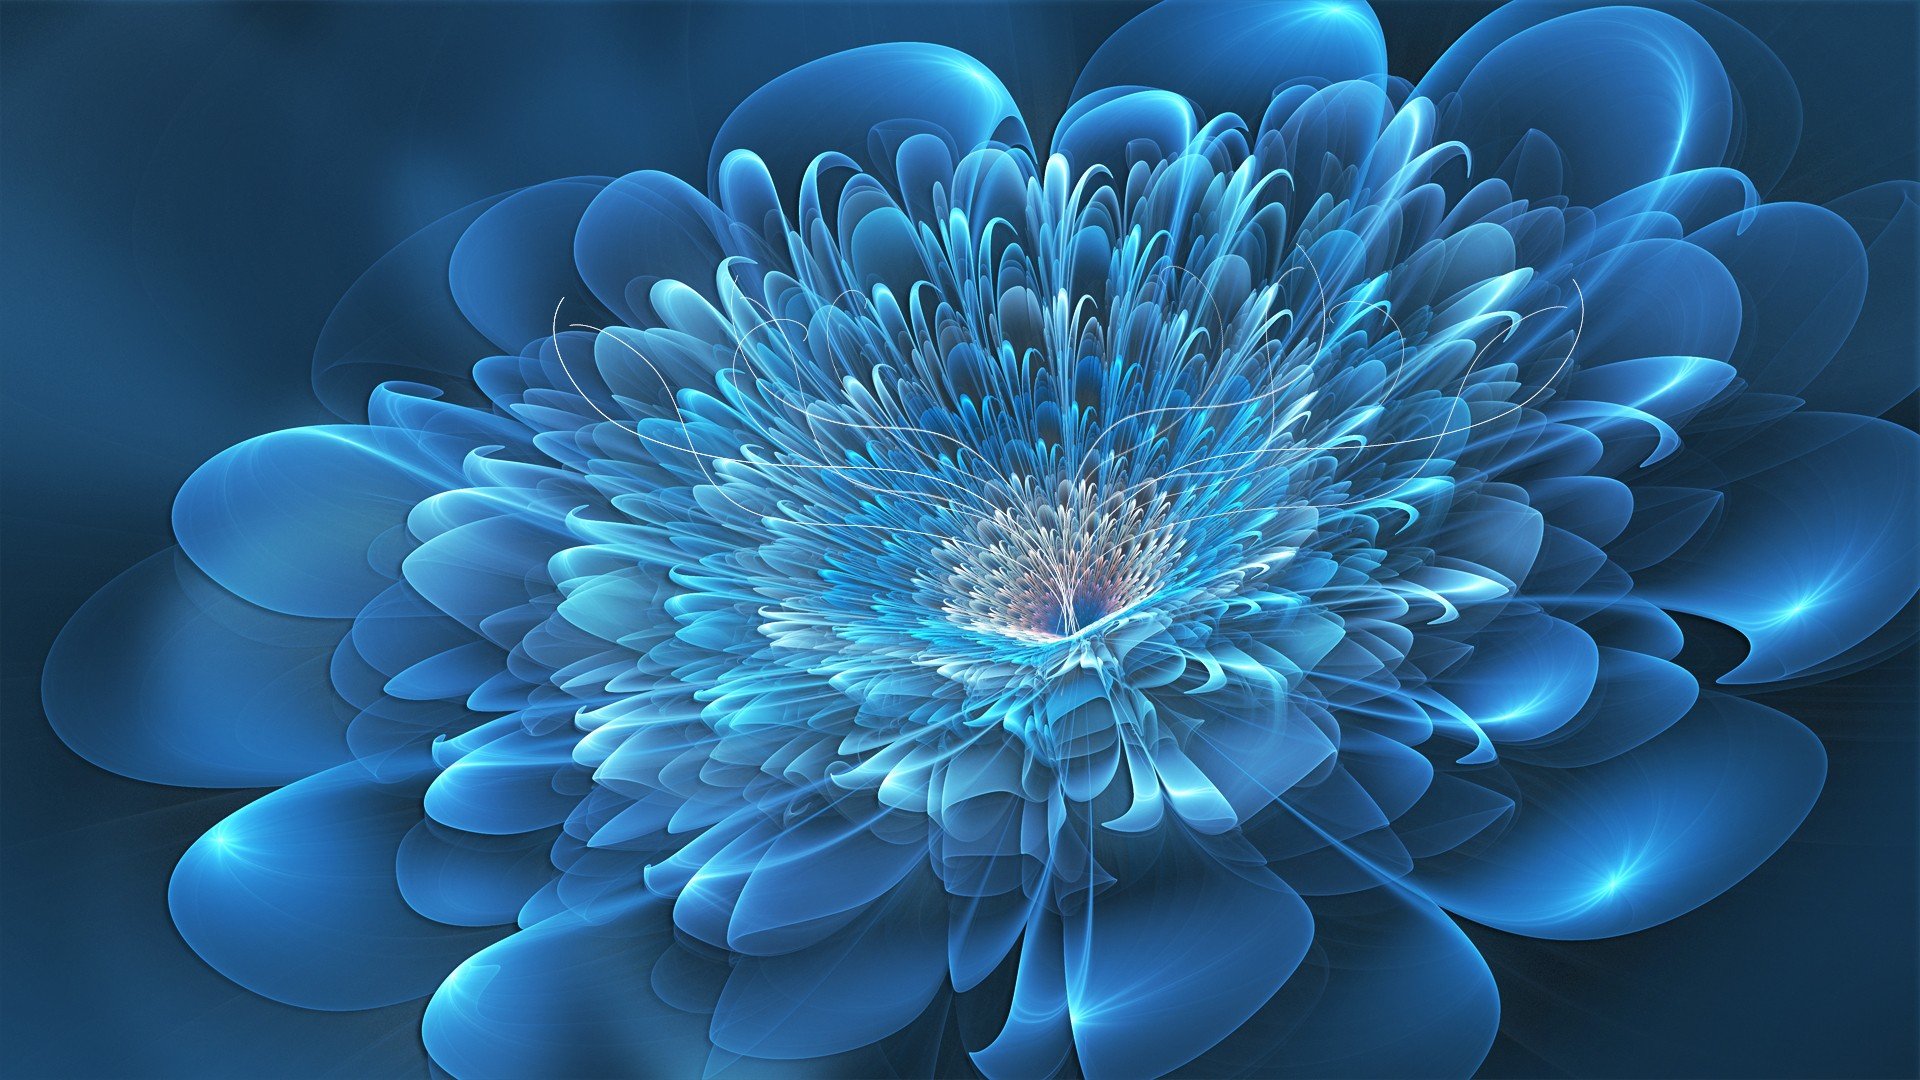 Wallpaper Digital Art Deviantart Flowers Blue Pictures High Definition